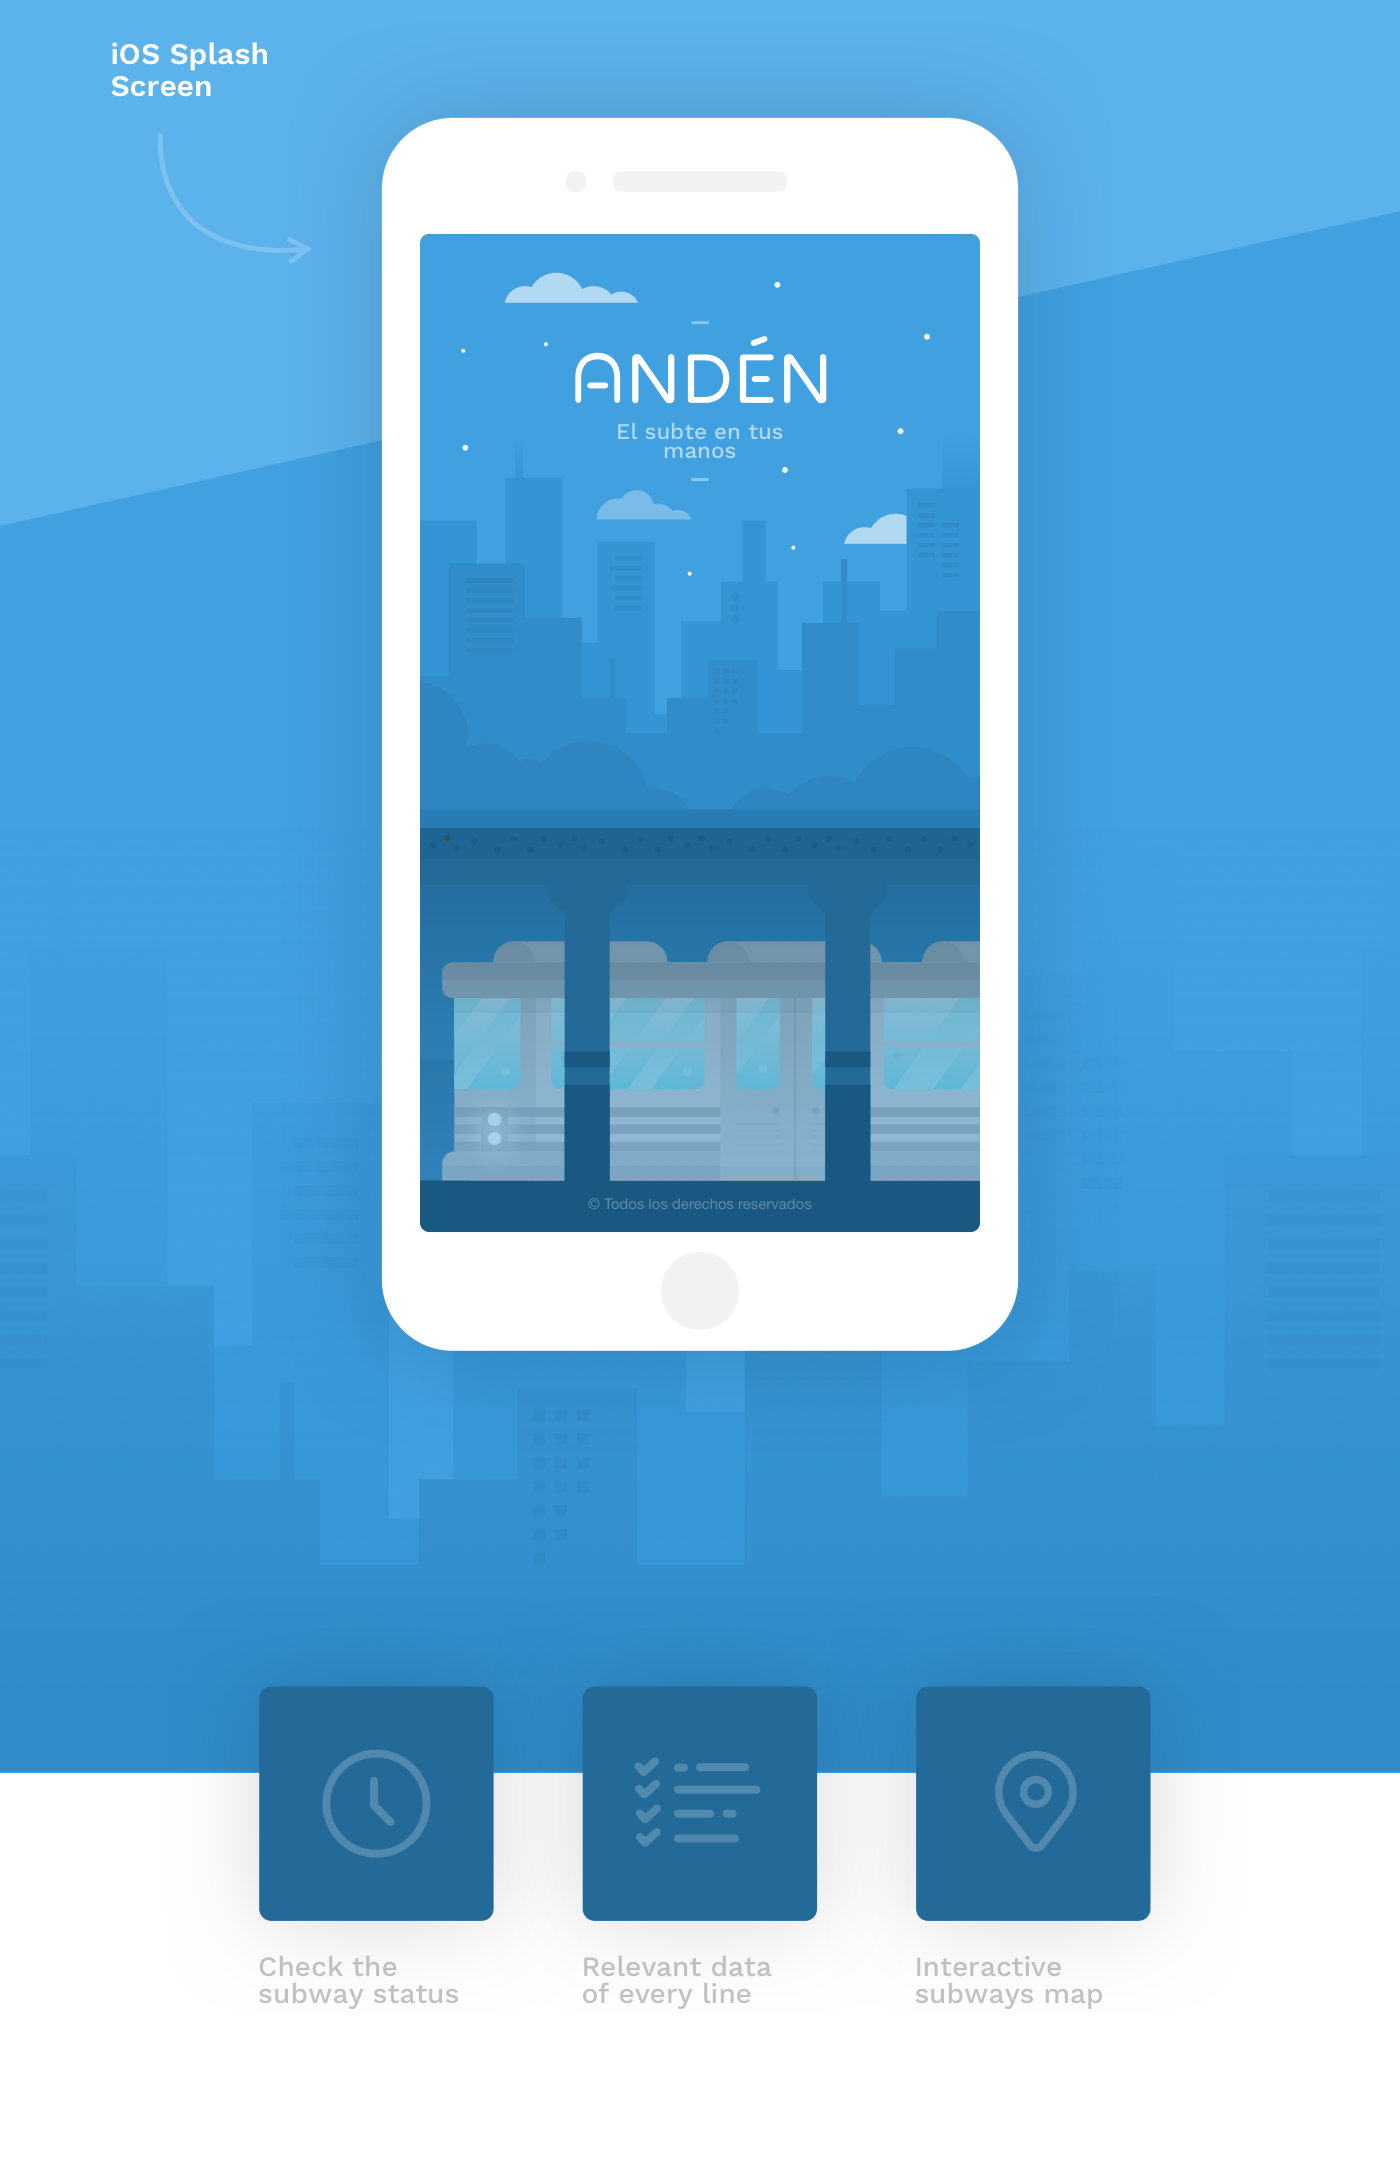 anden subway app ios mobile application UI ux